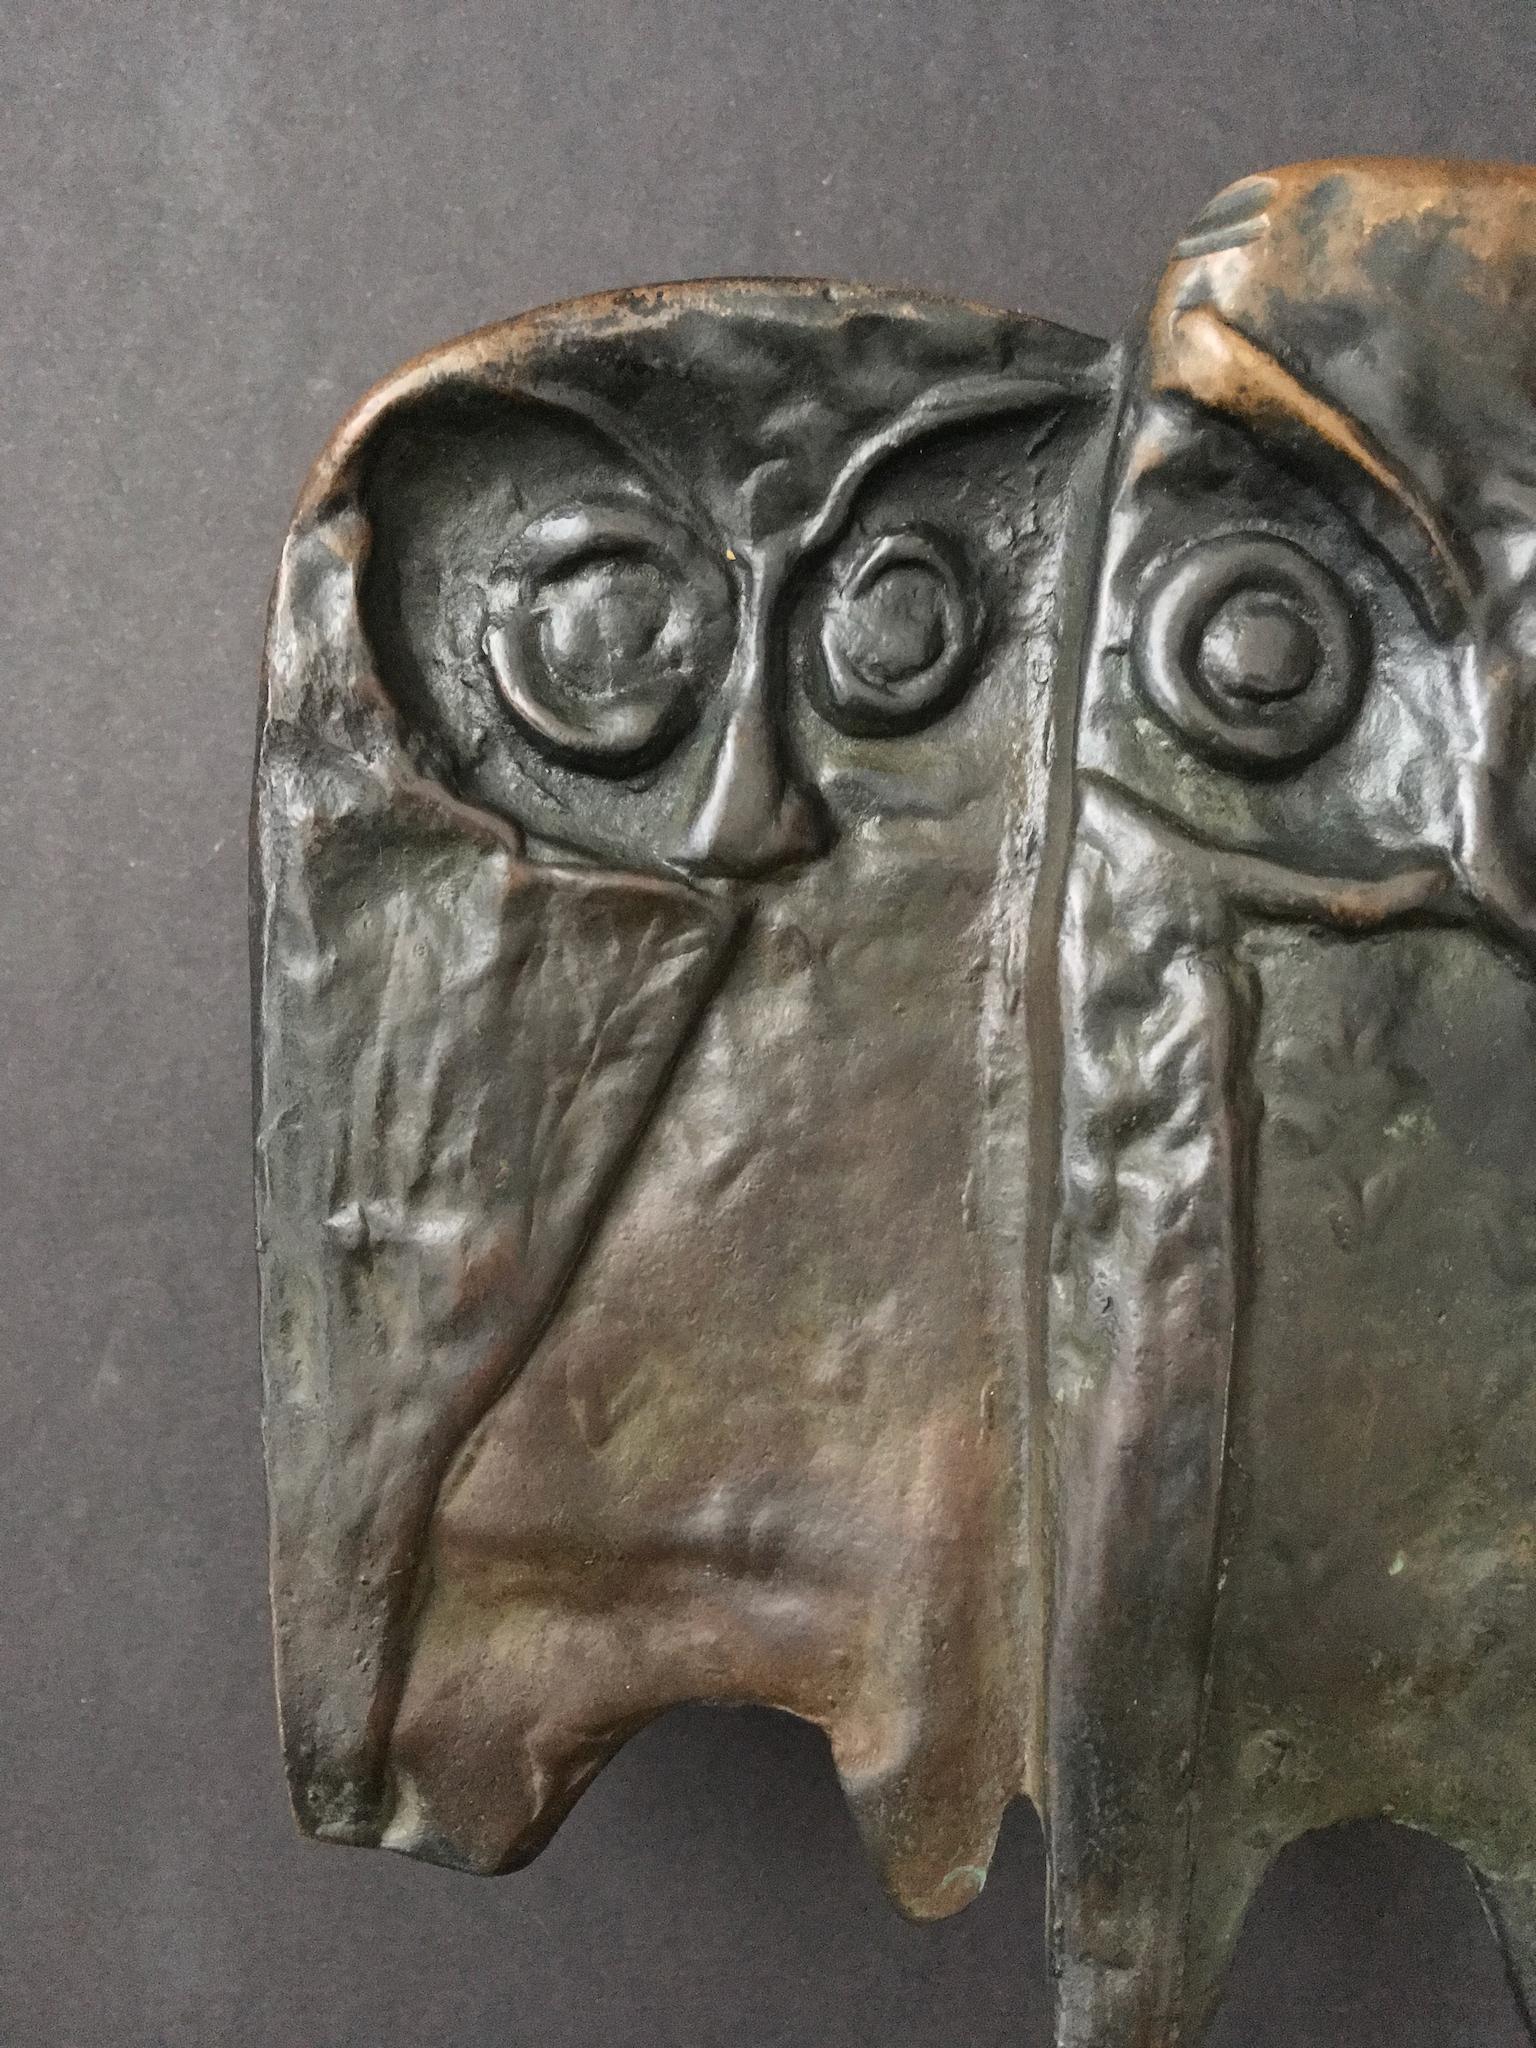 Mid-Century Modern Bronze Push or Pull Door Handle with Owl Design, 20th Century, European